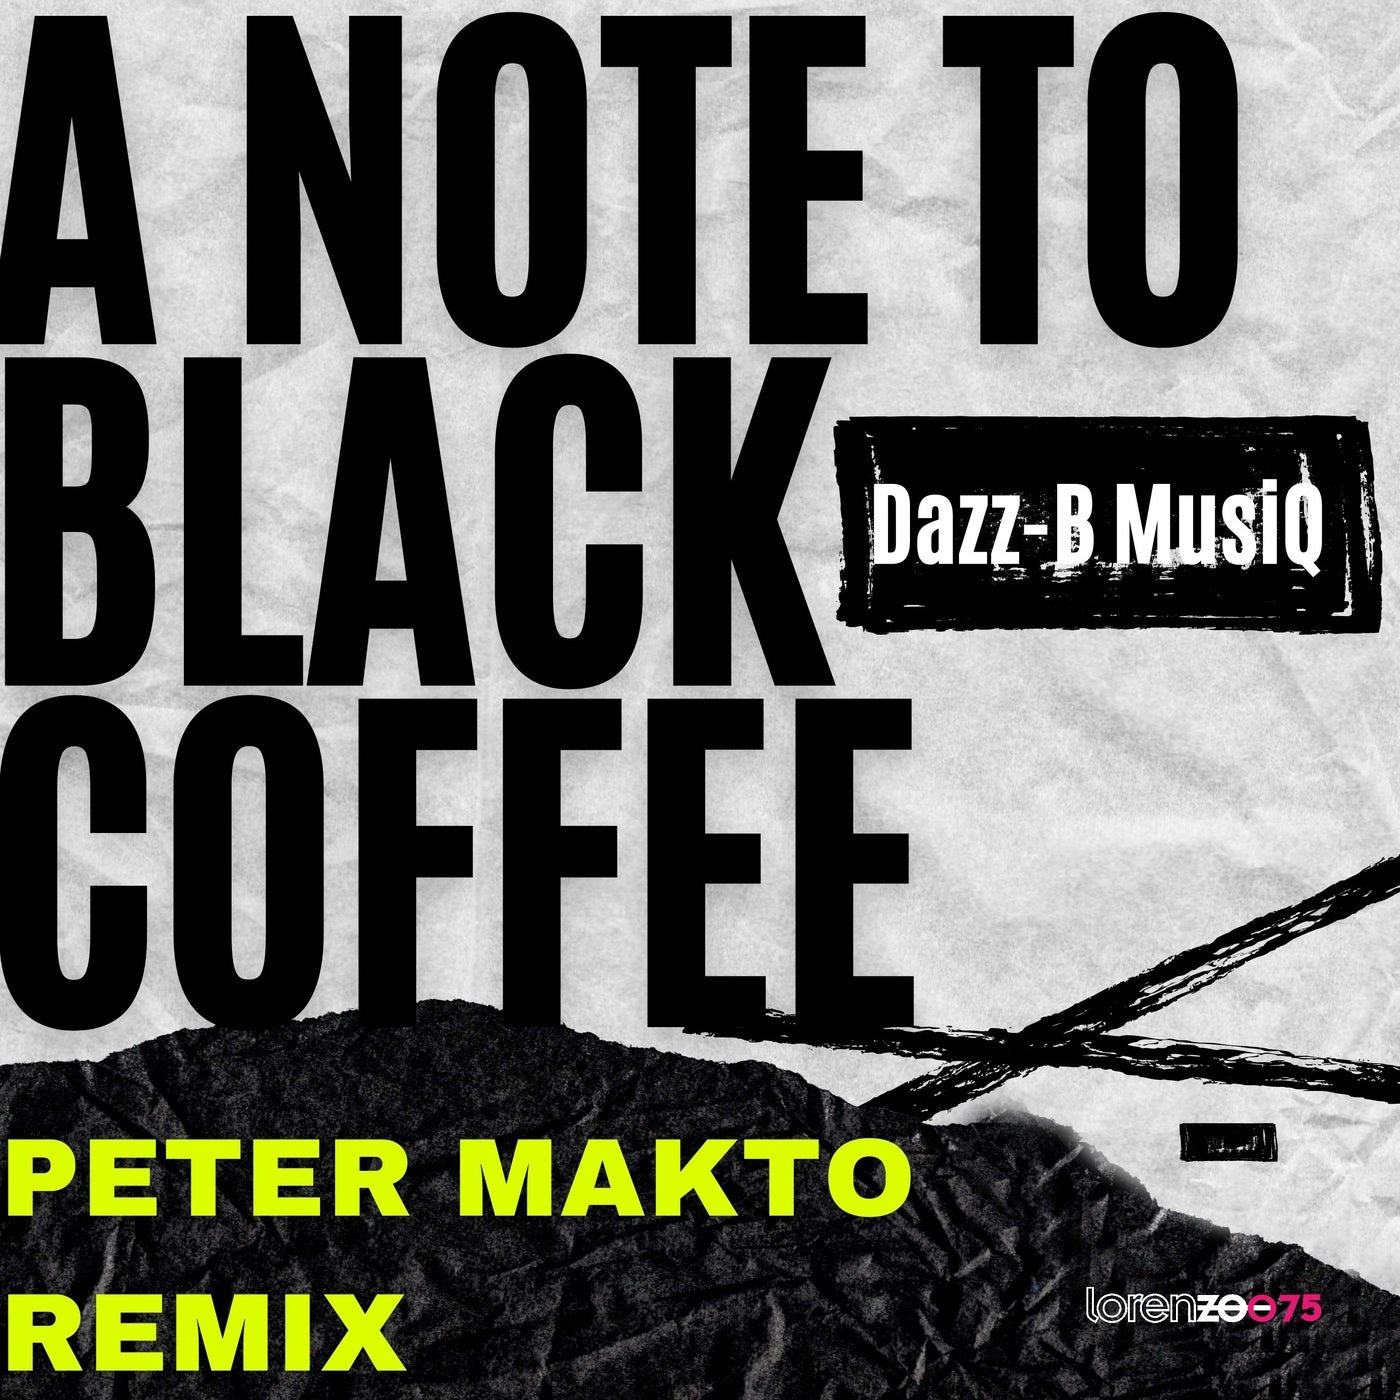 Dazz-B MusiQ - A Note to Black Coffee - Peter Makto Remix [LORENZOO75]